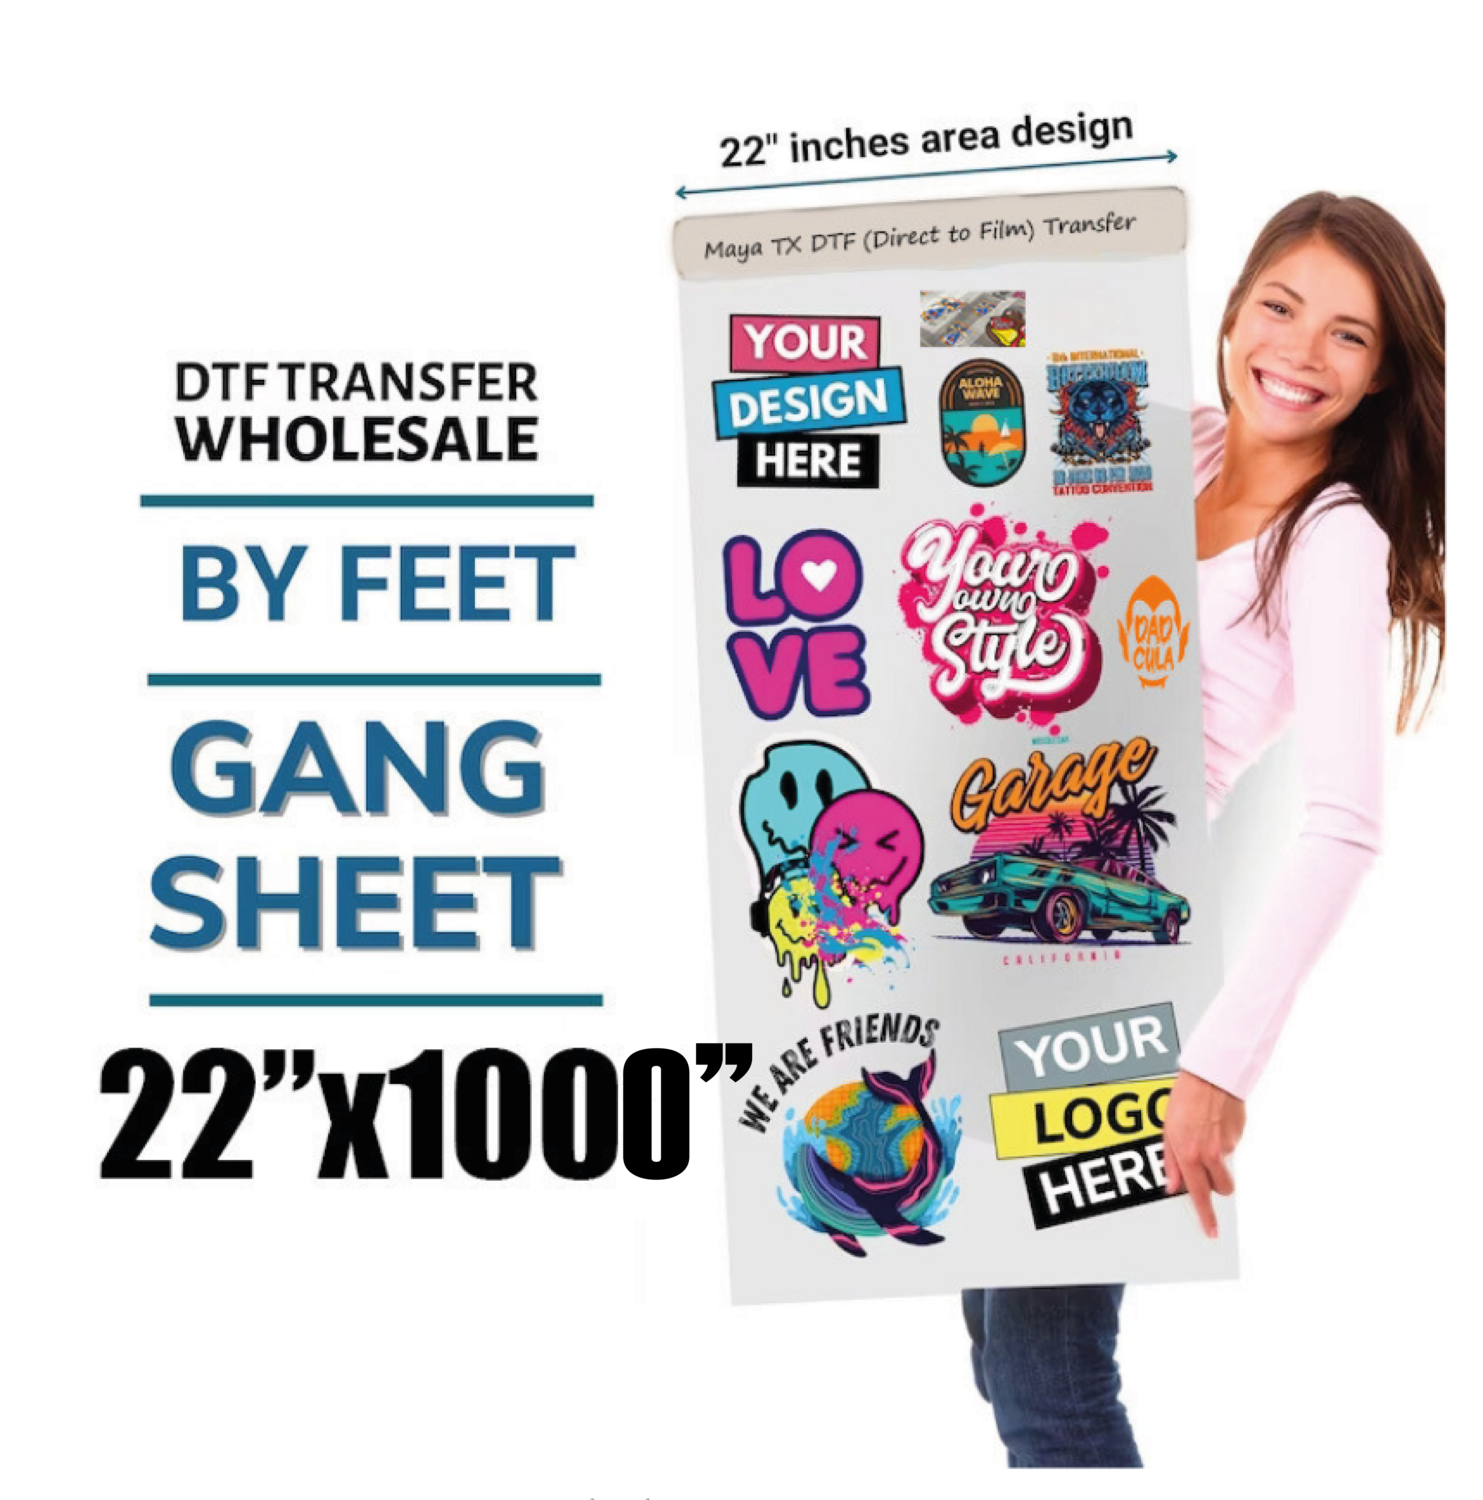 Direct to Film (DTF) Transfer Gang Sheet 22"x1000"